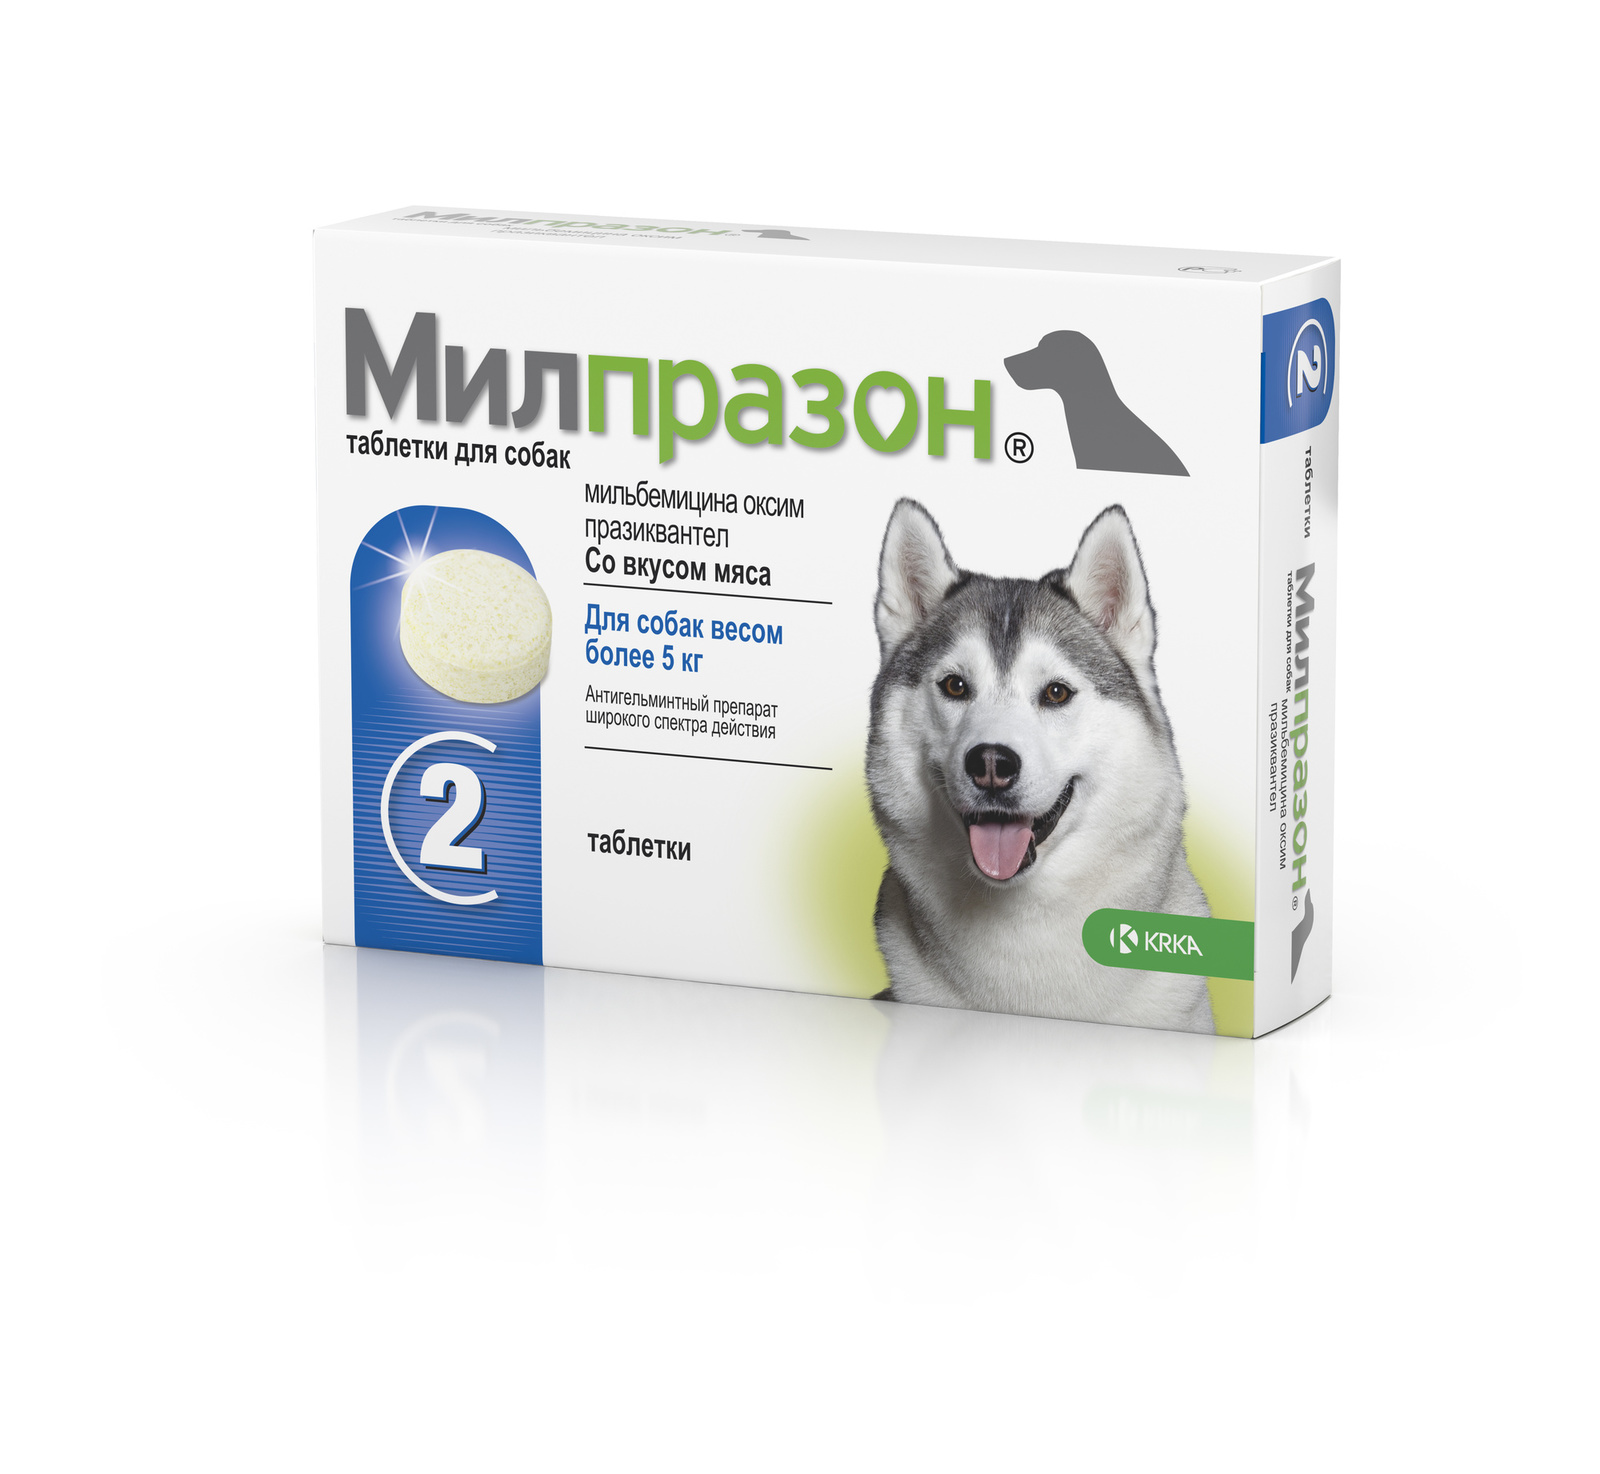 KRKA KRKA милпразон 12,5 мг/125 мг, 2 таблетки для взрослых собак весом более 5 кг (14 г) krka милпразон таблетки для собак весом более 5 кг 2 таб